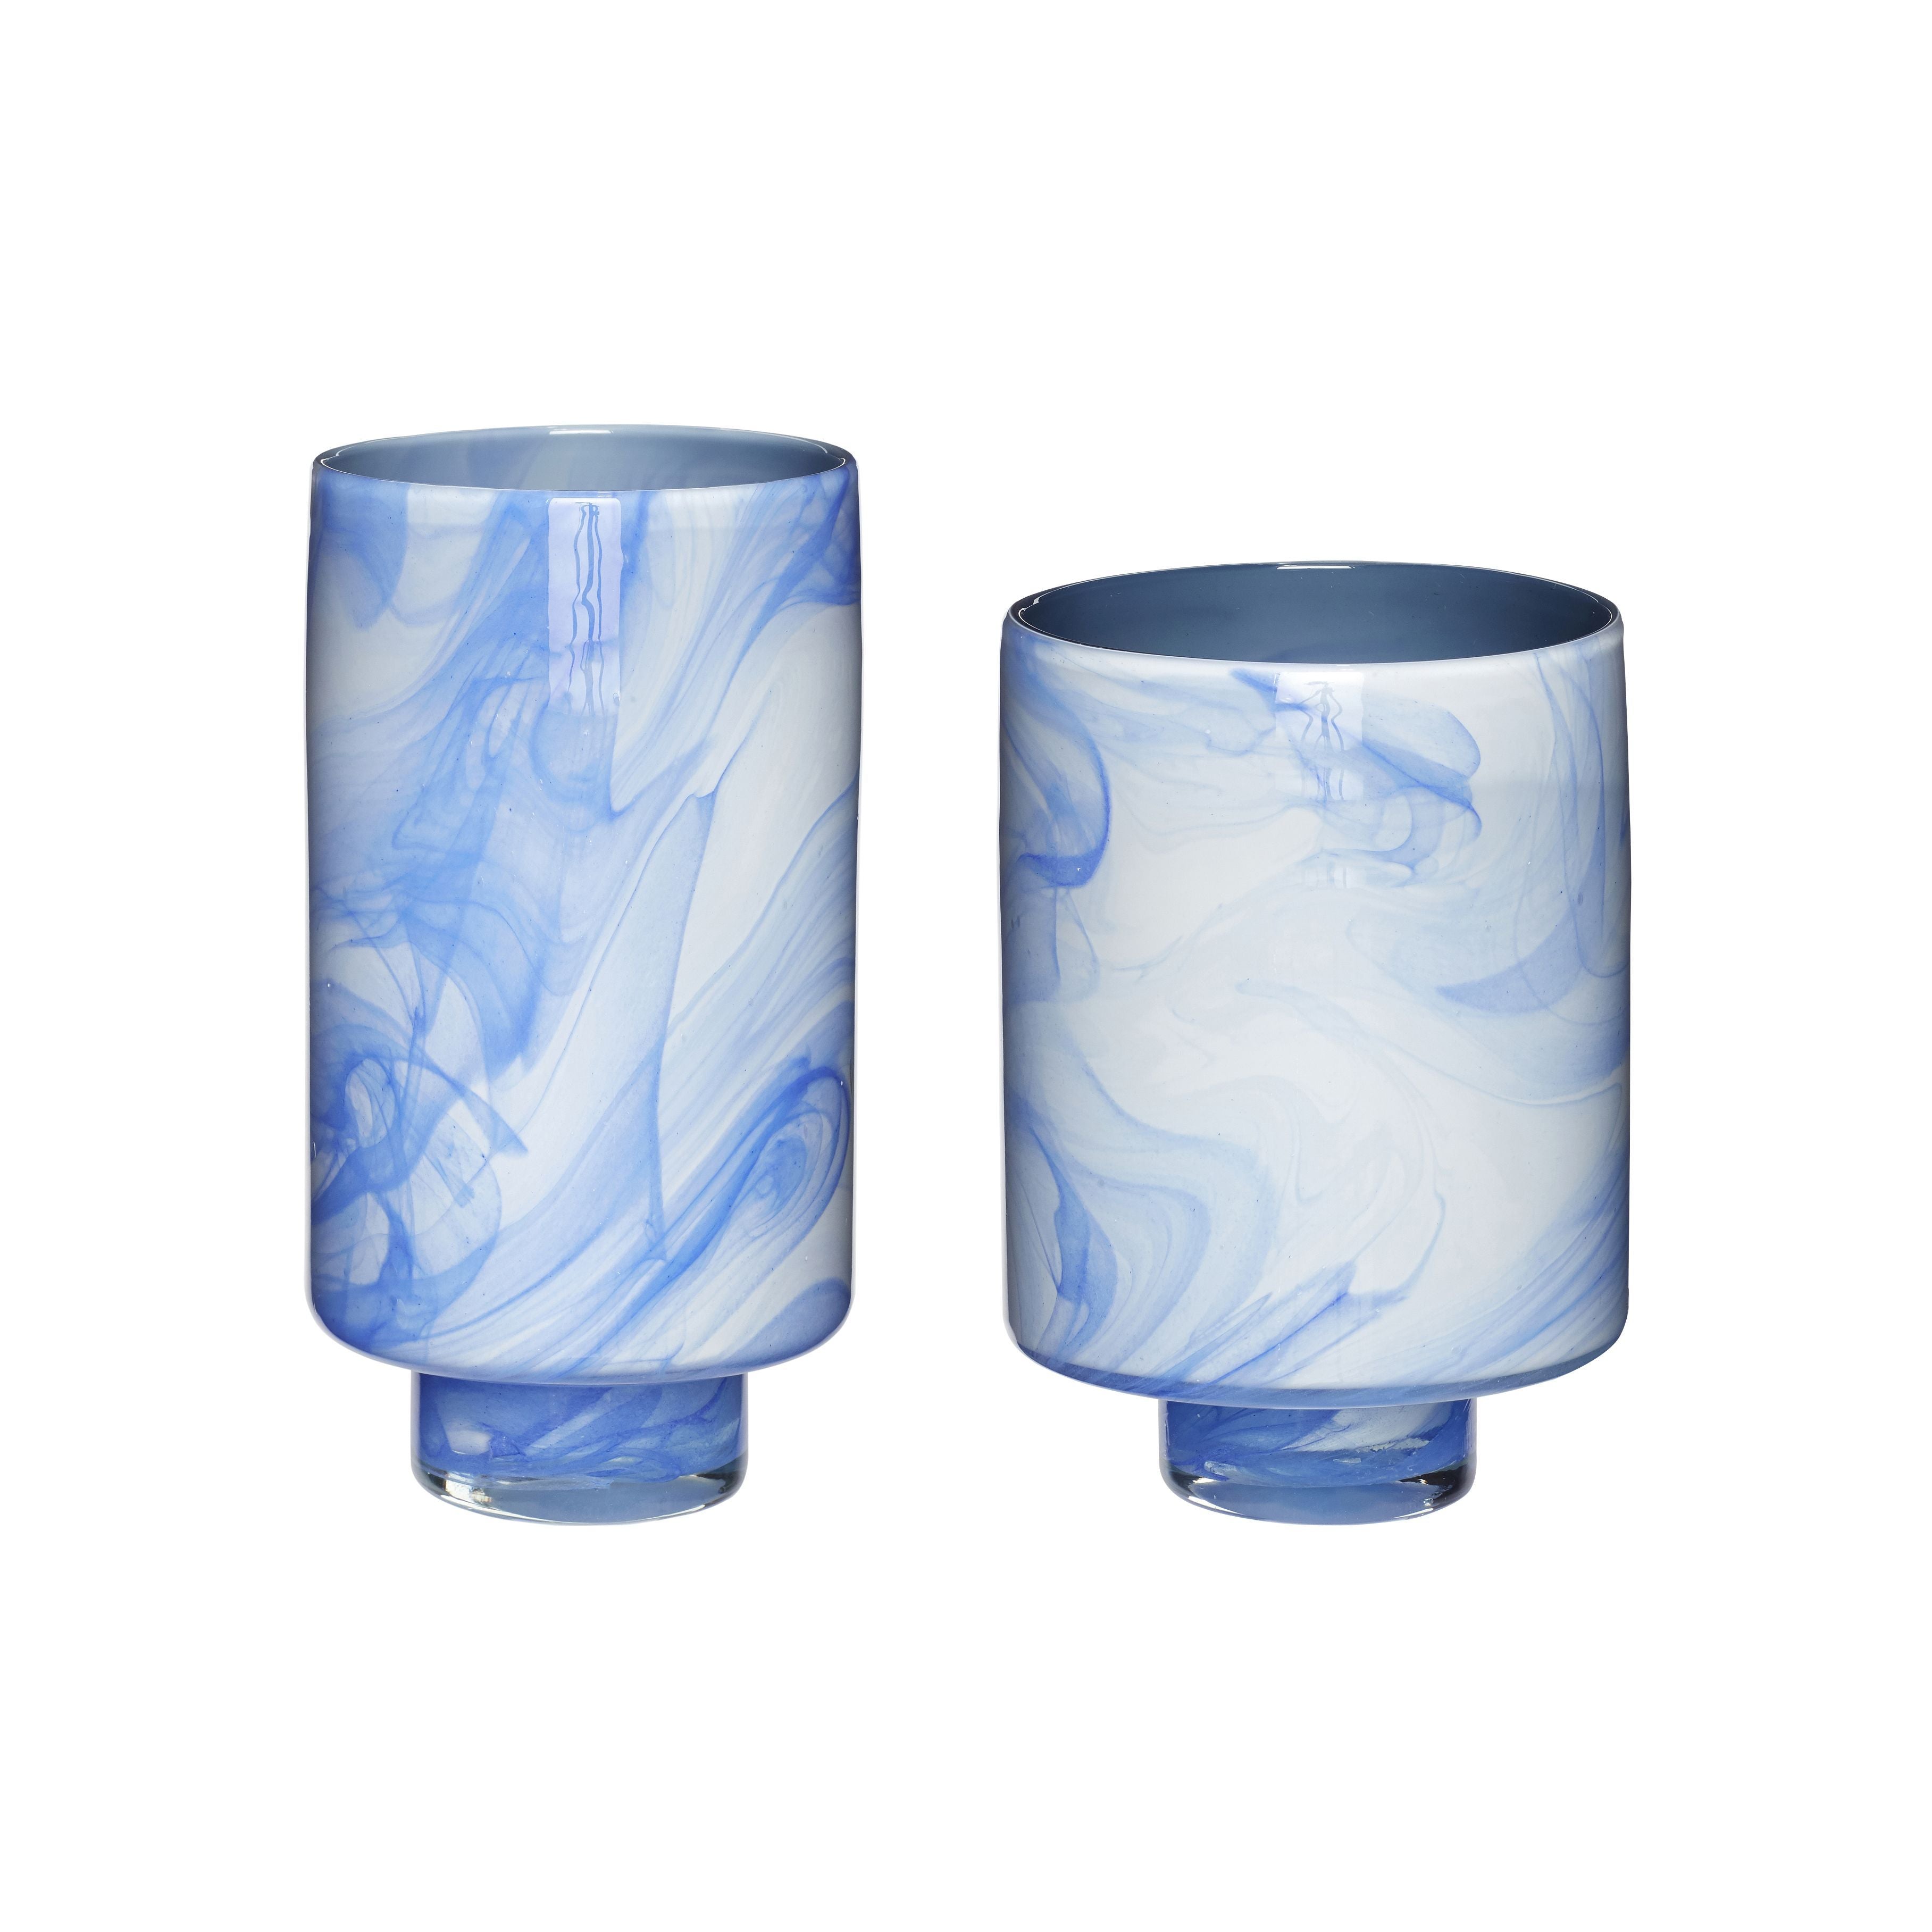 Hübsch Nuage vase verre blanc / bleu s / 2